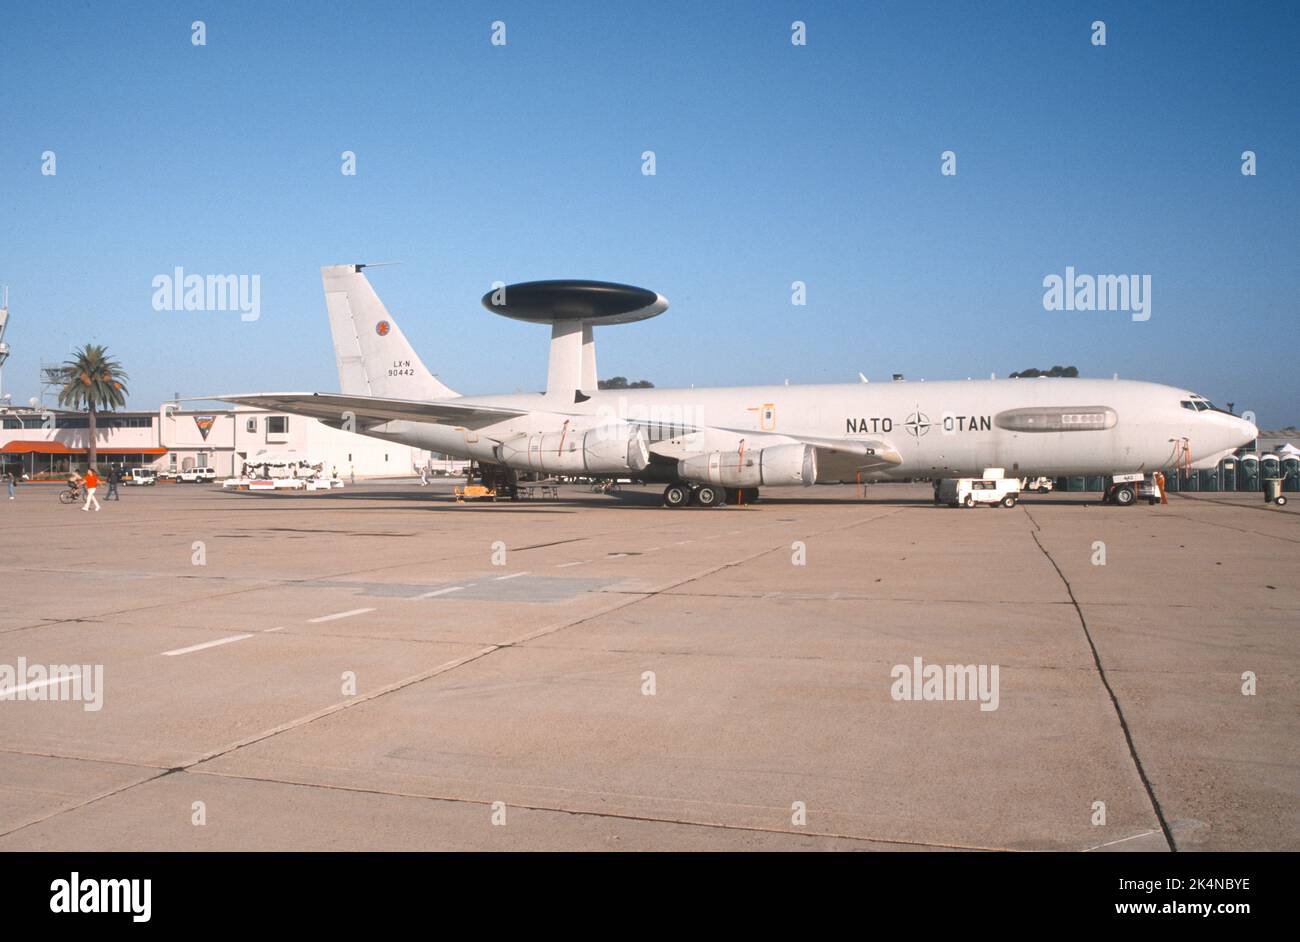 NATO AWACS on the tarmac at NAS Miramar in San Diego, California Stock Photo